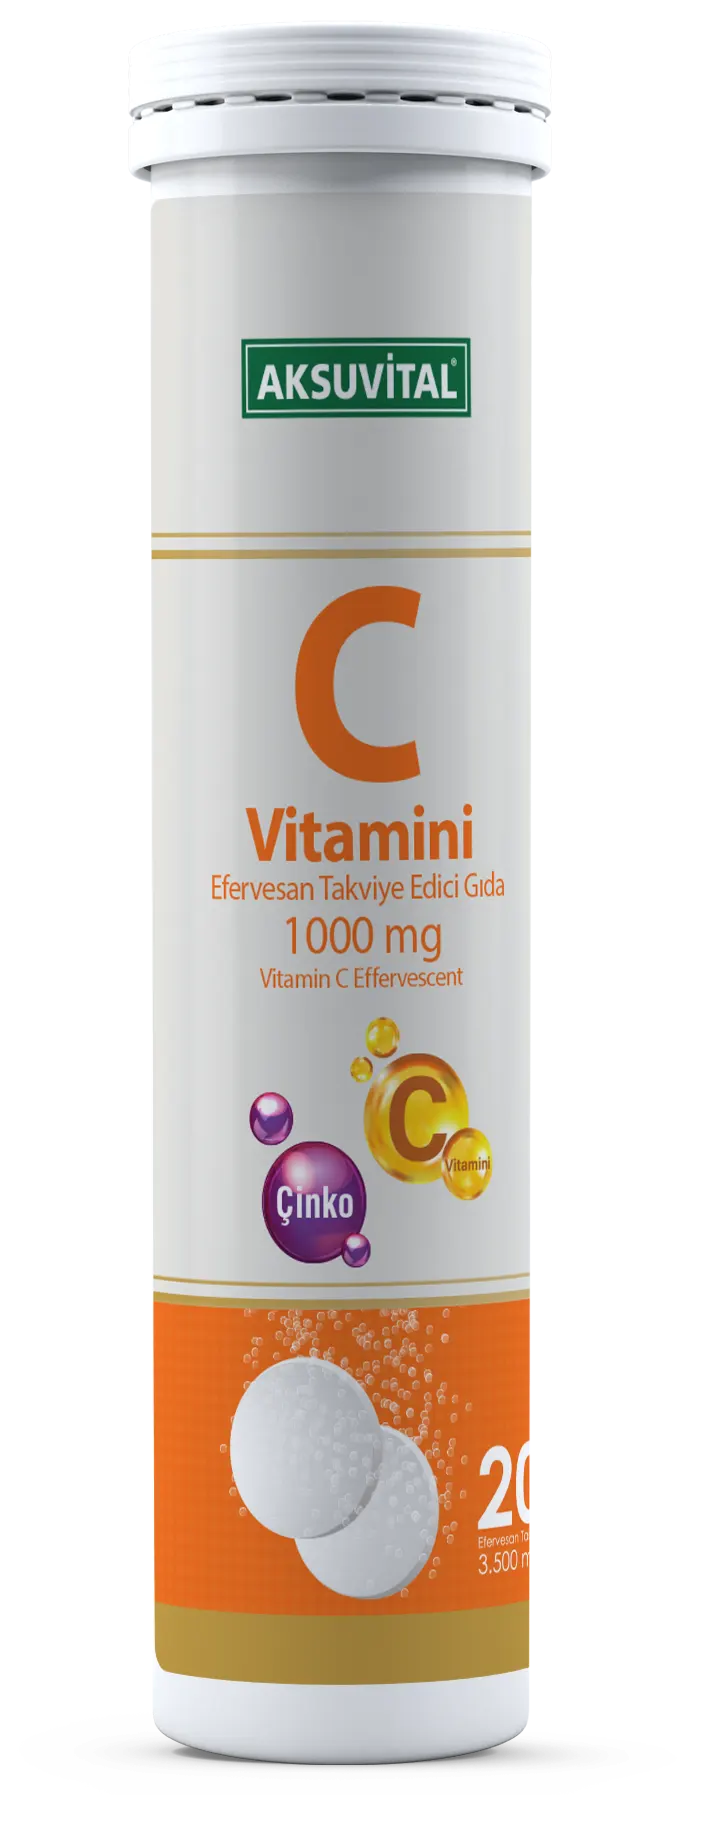 Aksuvital - Aksu Vital C Vitamini Efervesan